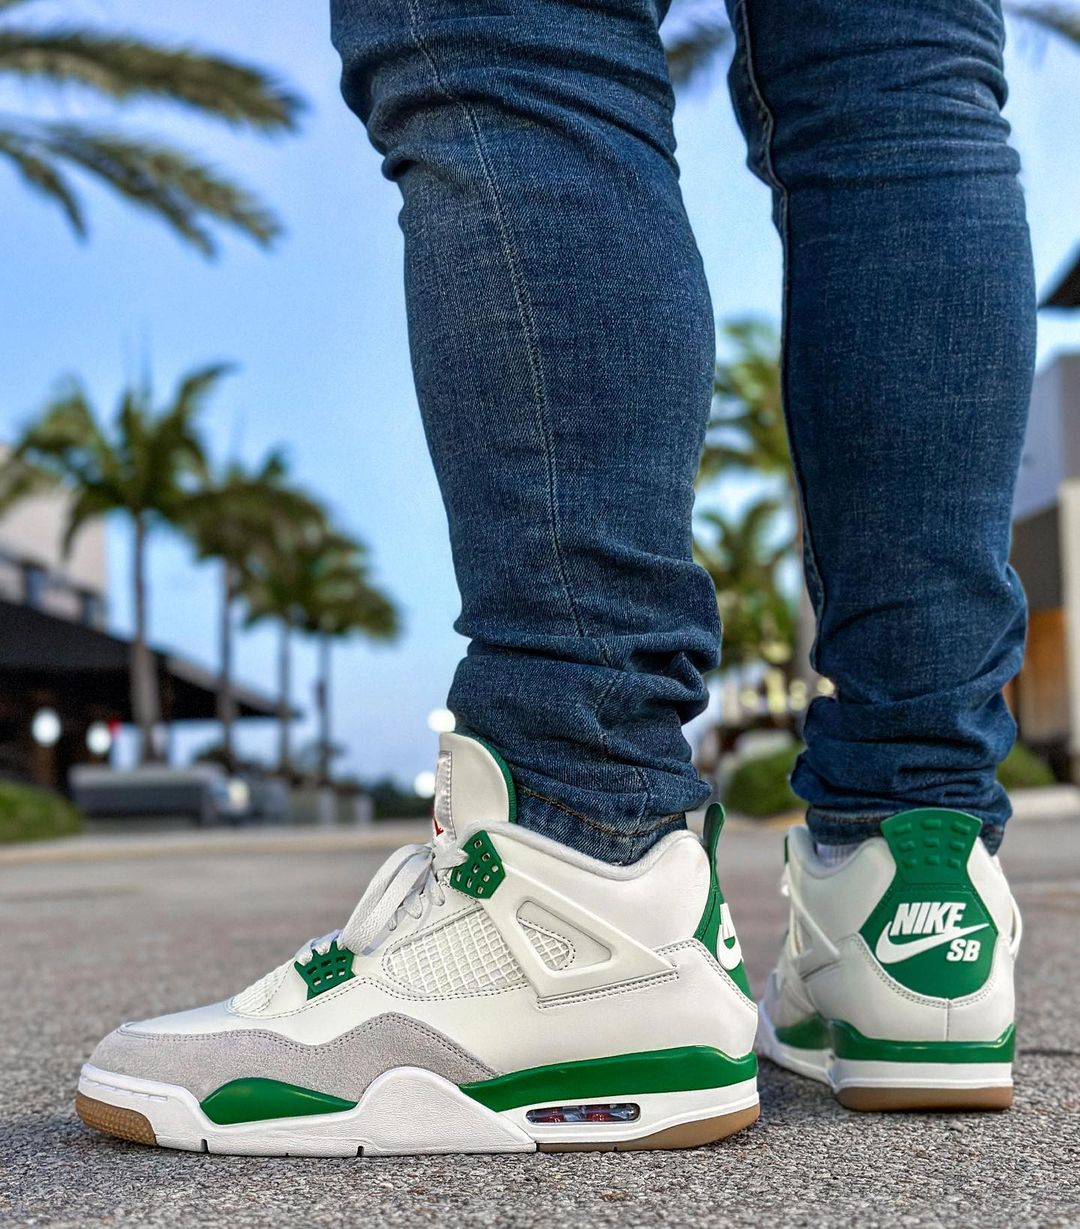 Nike SB Air Jordan 4 Pine Green @pr_sneaks23